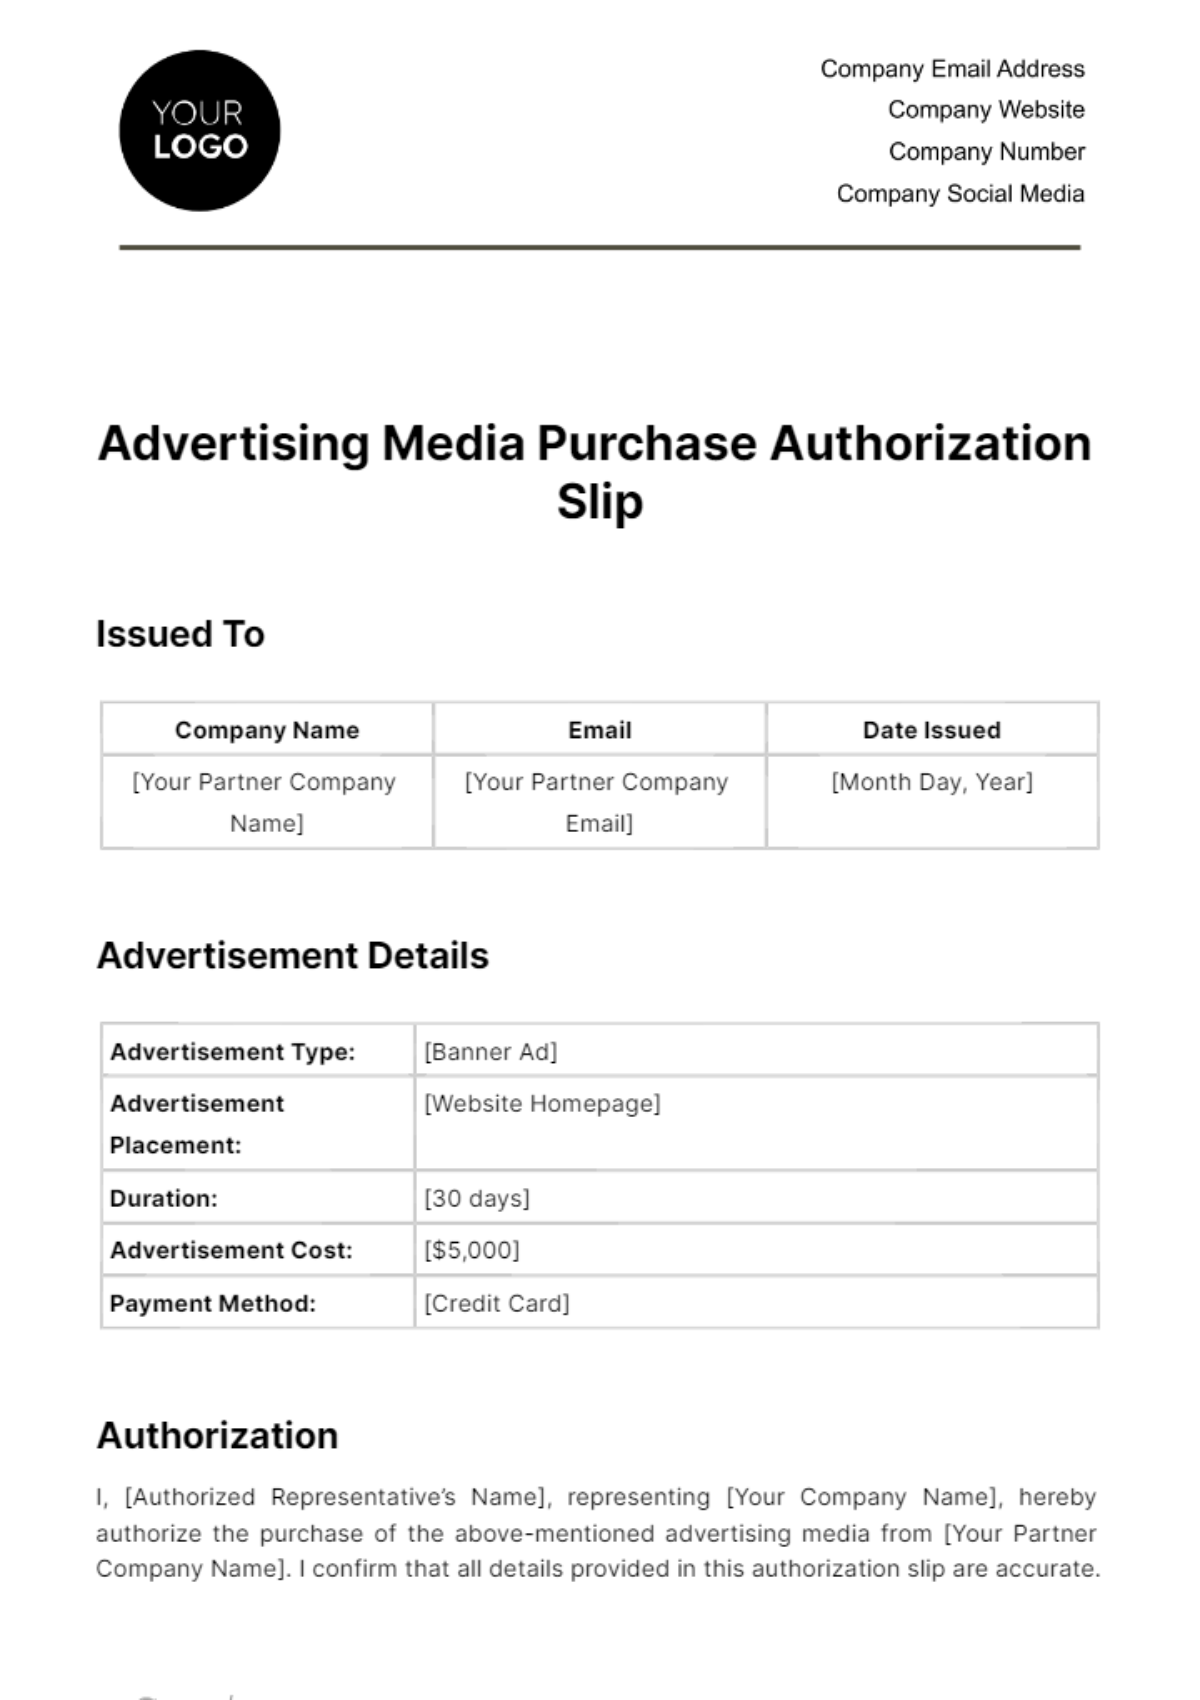 Advertising Media Purchase Authorization Slip Template